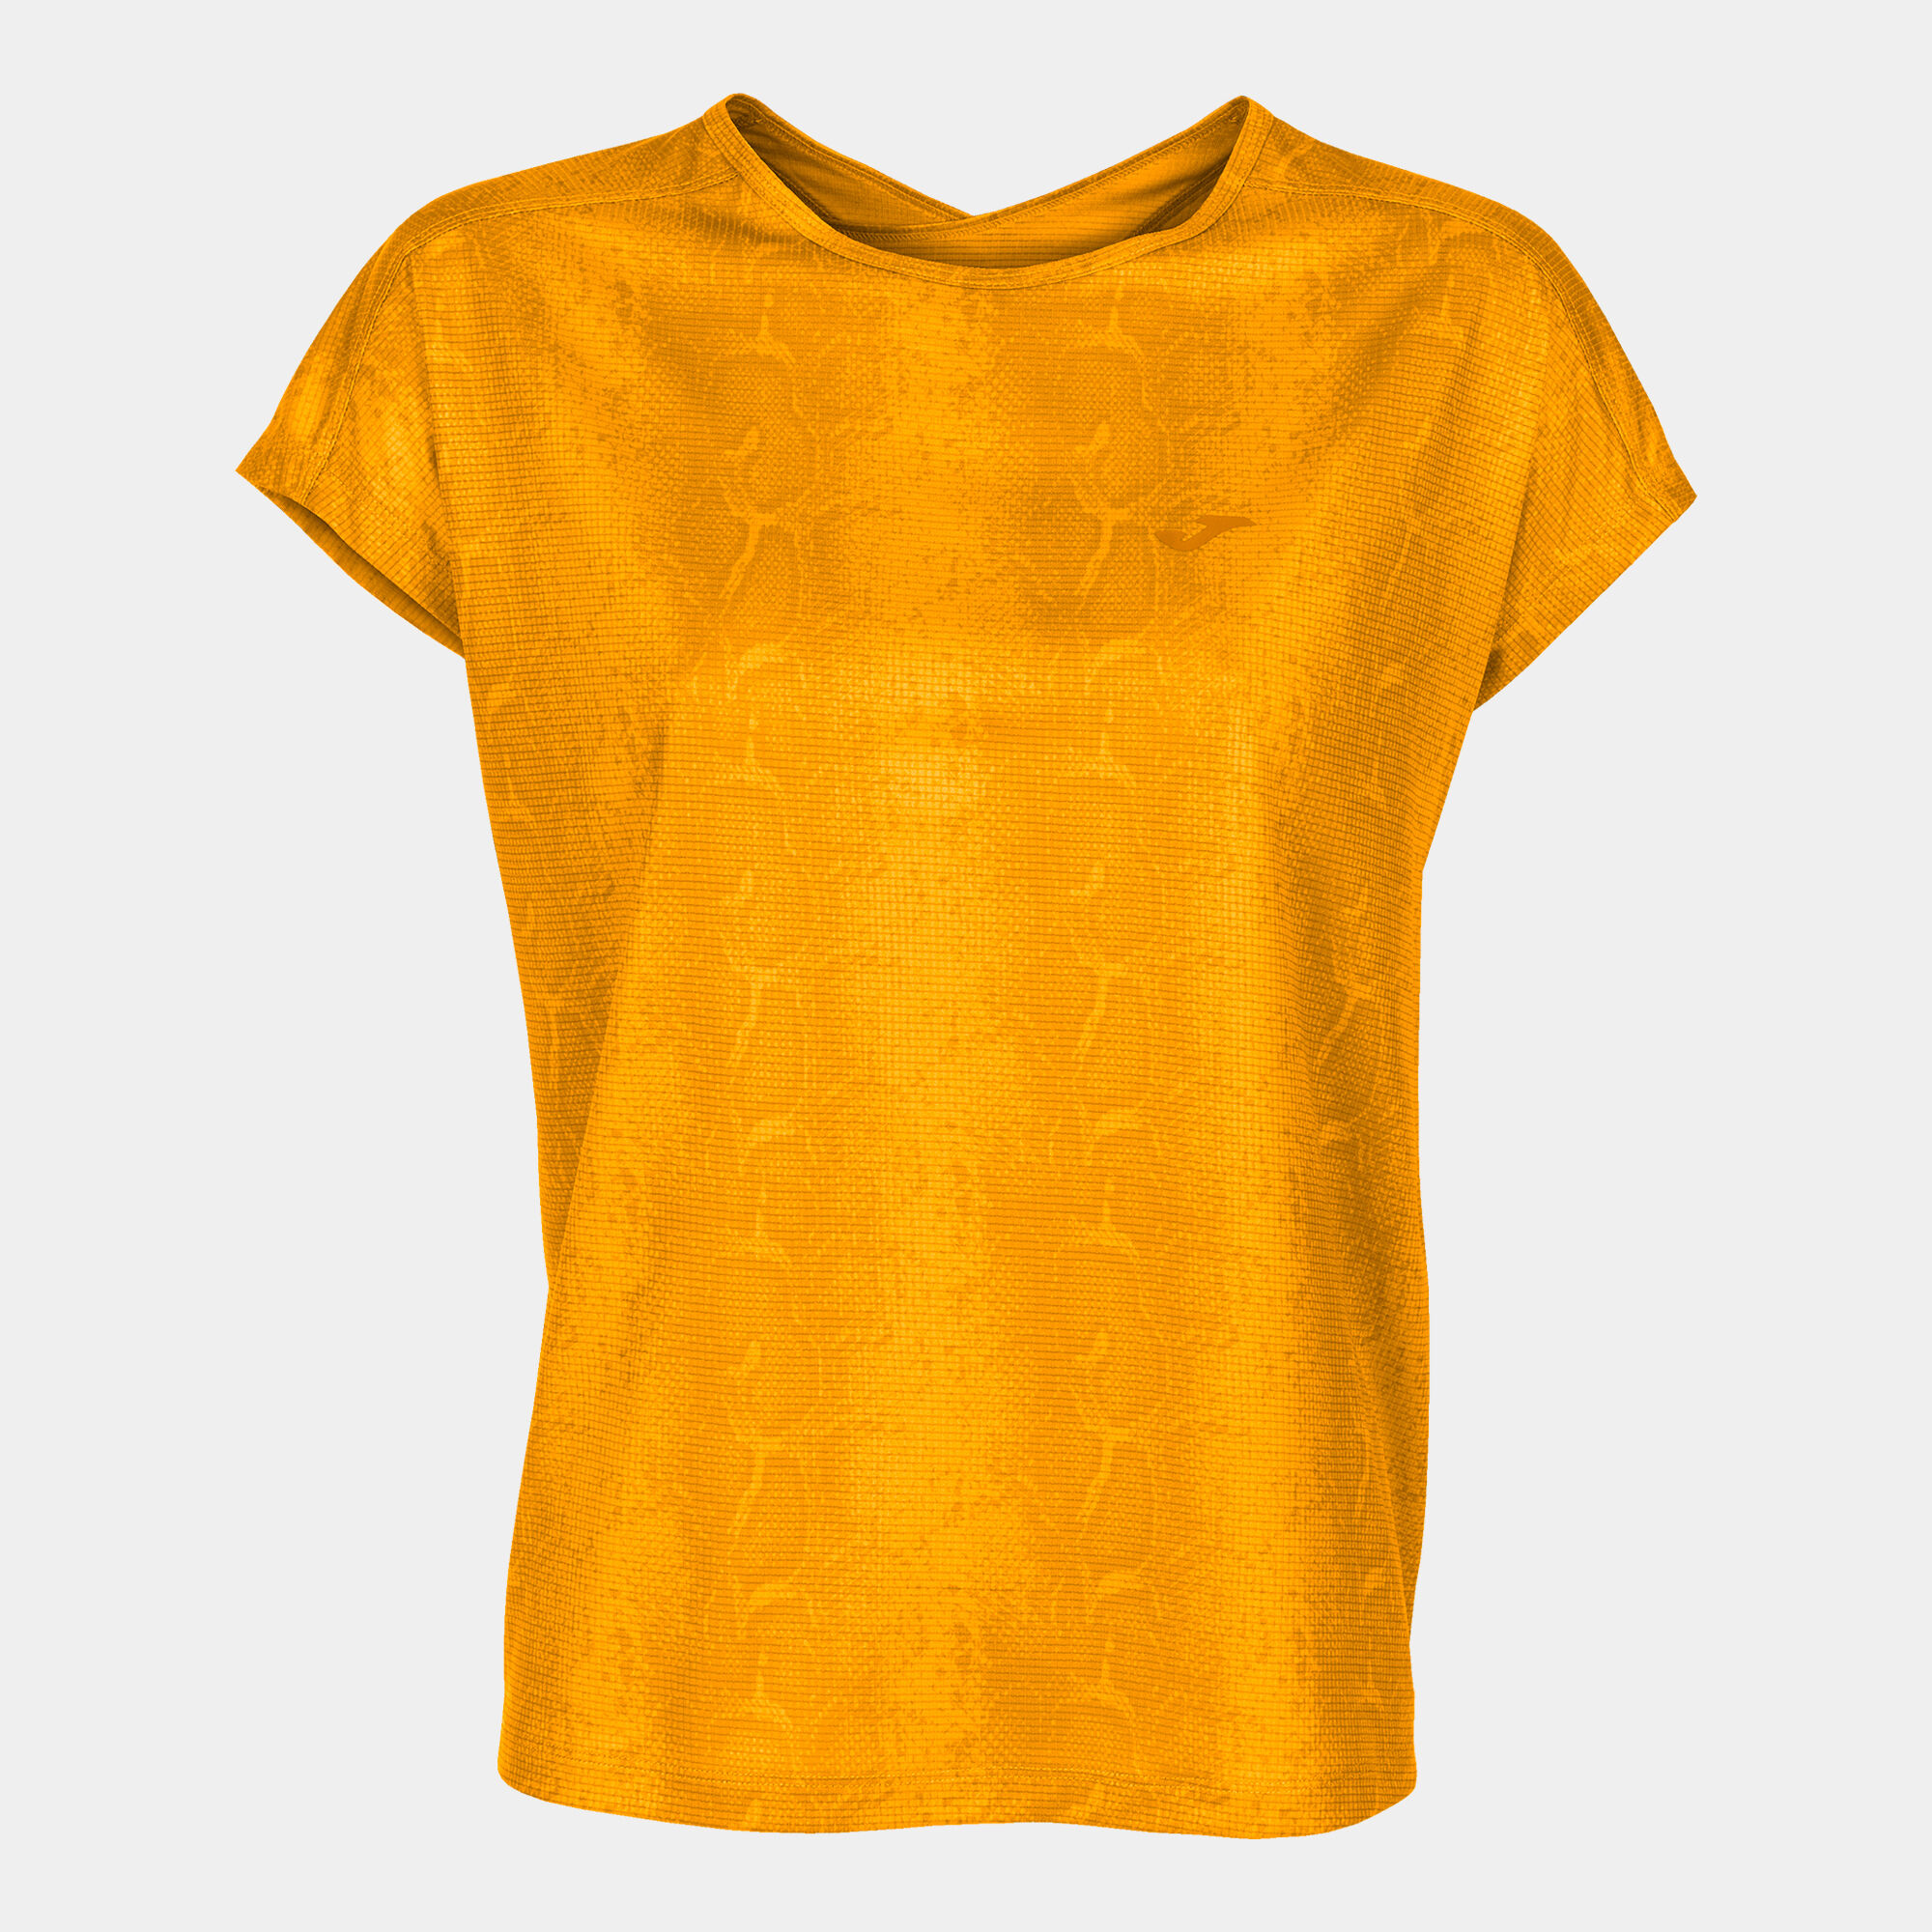 Camiseta manga corta mujer Core naranja